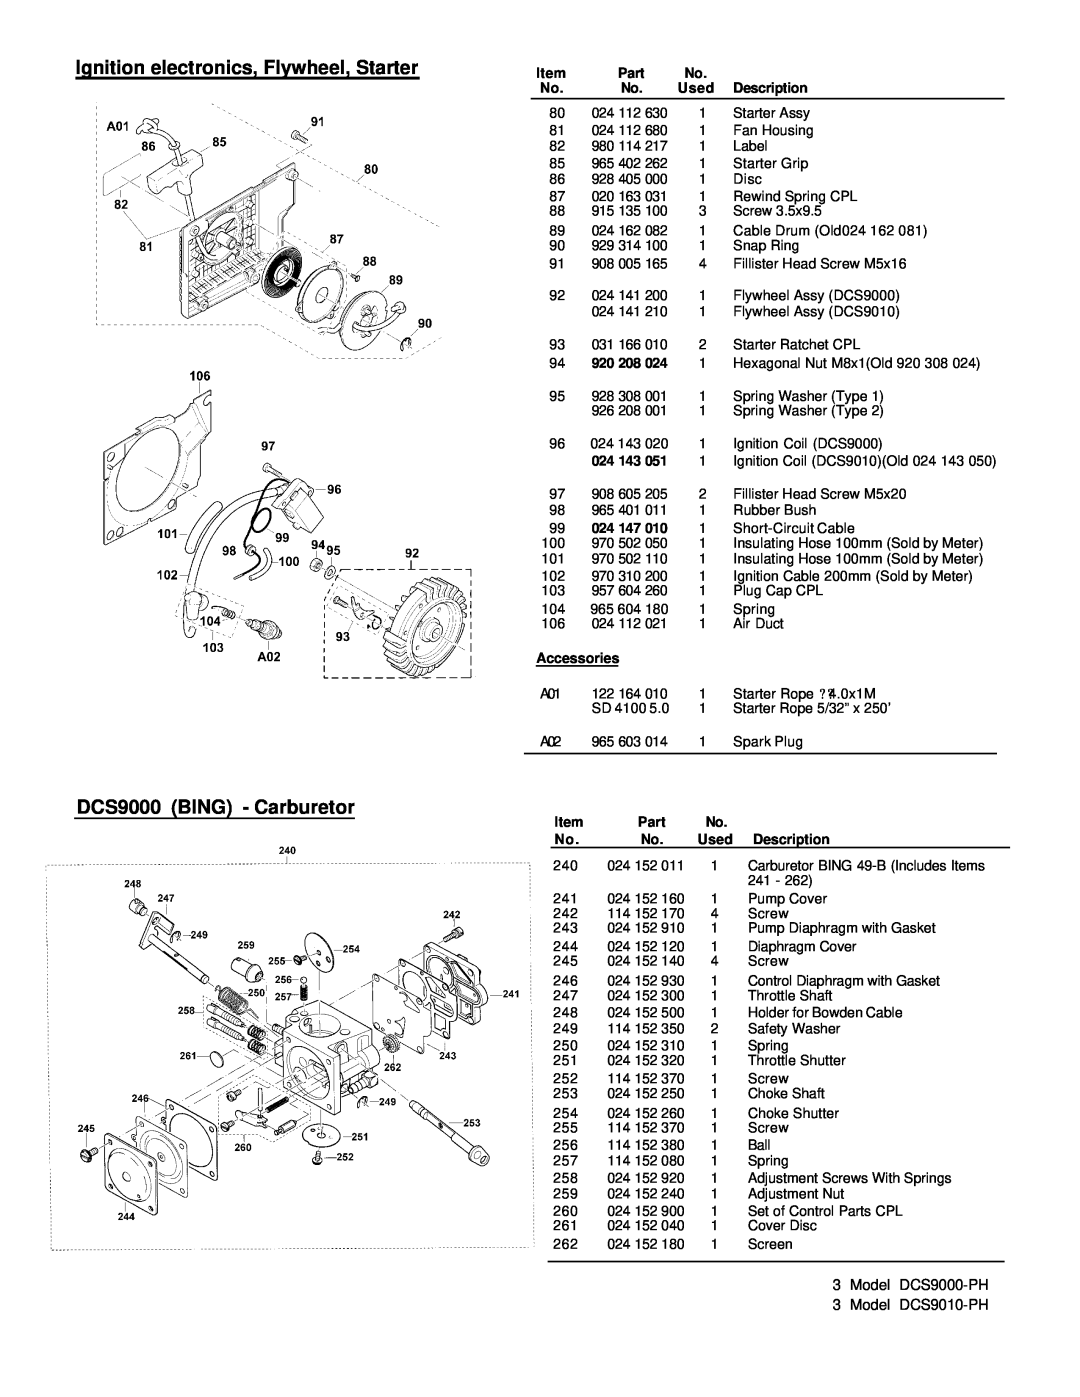 Makita ZISP480DXSS Ignition electronics, Flywheel, Starter, DCS9000 BING - Carburetor, Used, Description, Accessories 